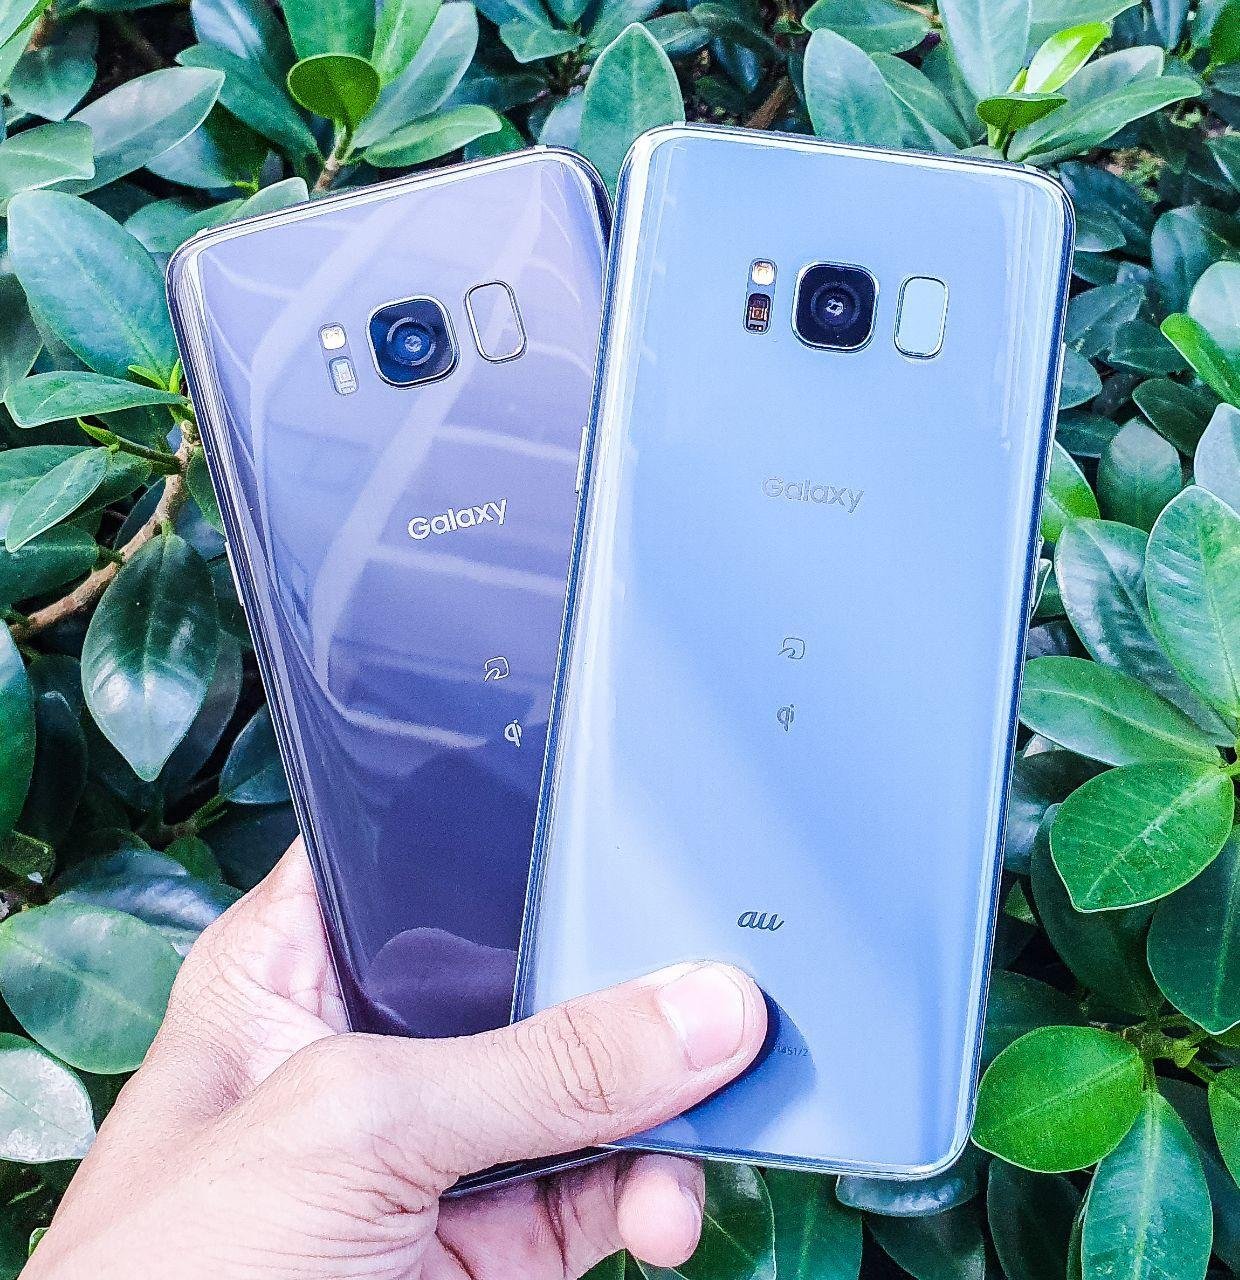 Thiết tiếp Samsung galaxy S8 cu